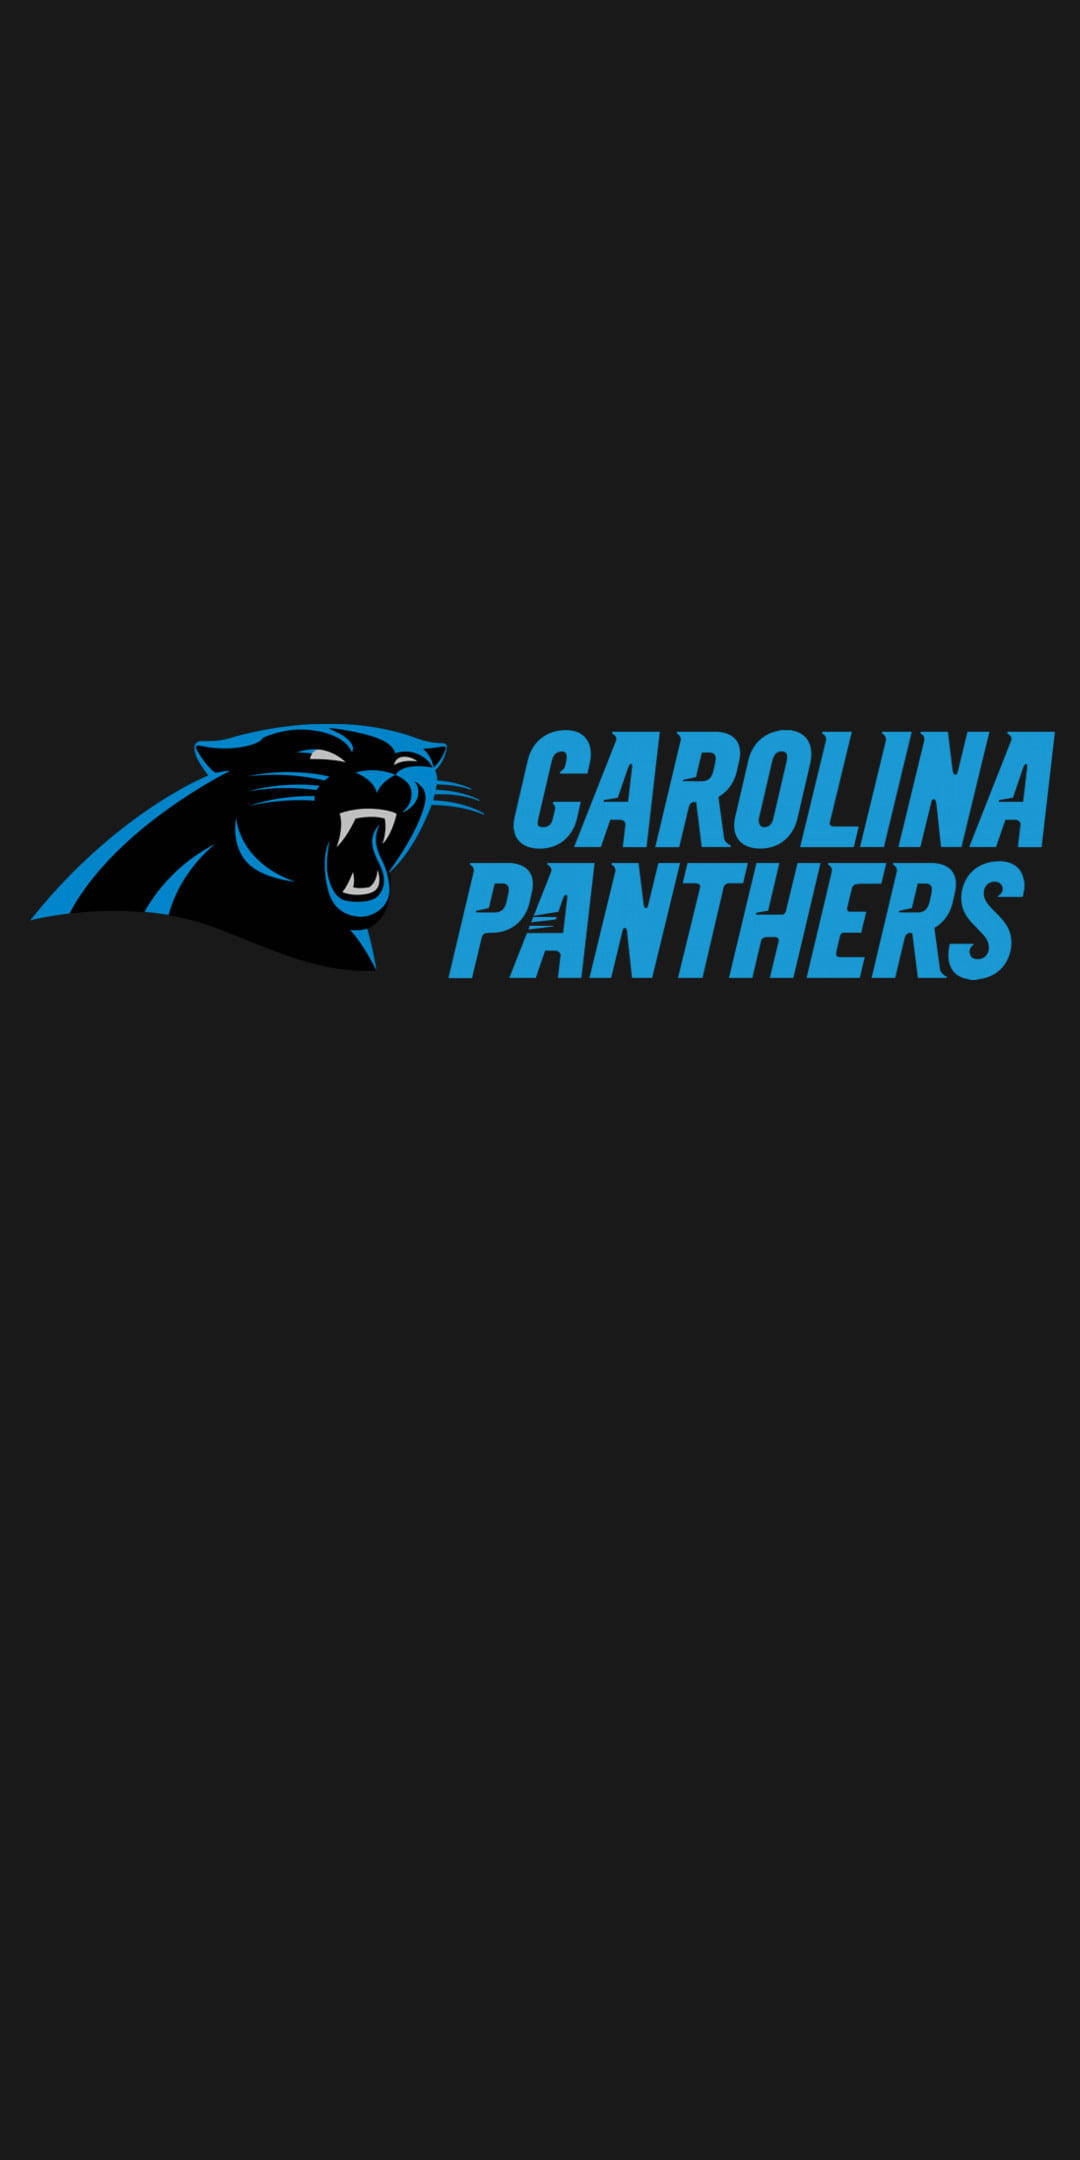 Carolina Panthers Logo And Name Wallpaper